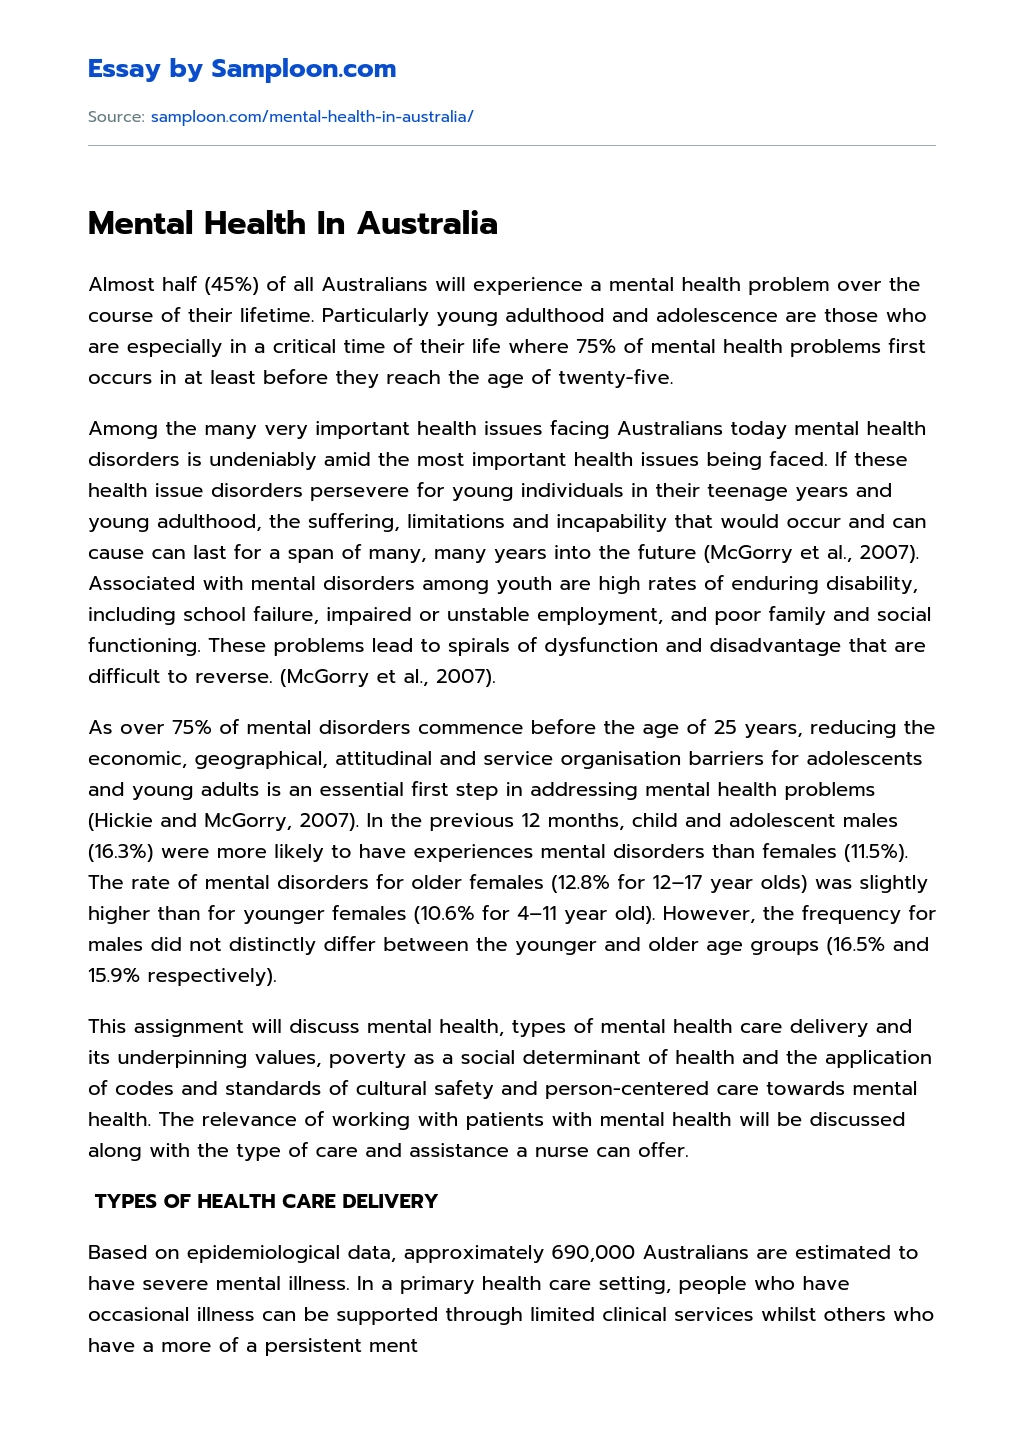 Mental Health In Australia essay